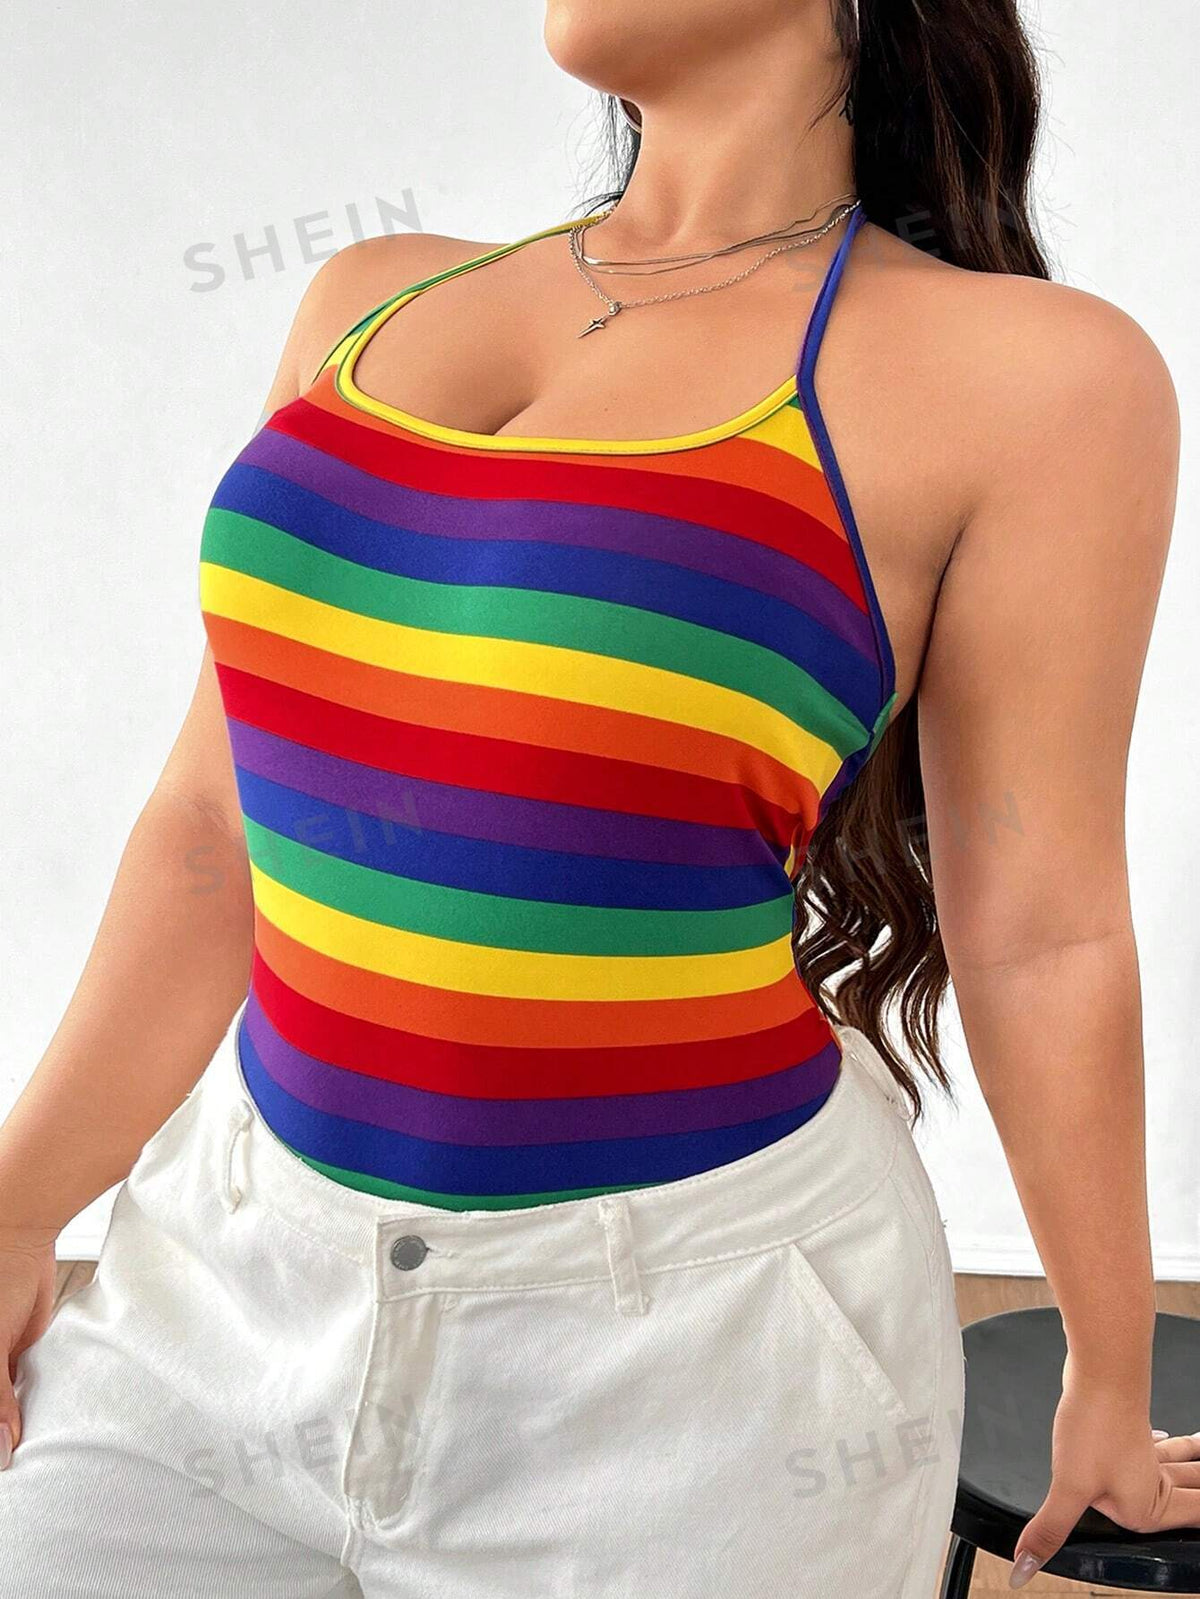 EZwear Plus Size Women's Colorful Stripe Printed Halter Neck Bodysuit